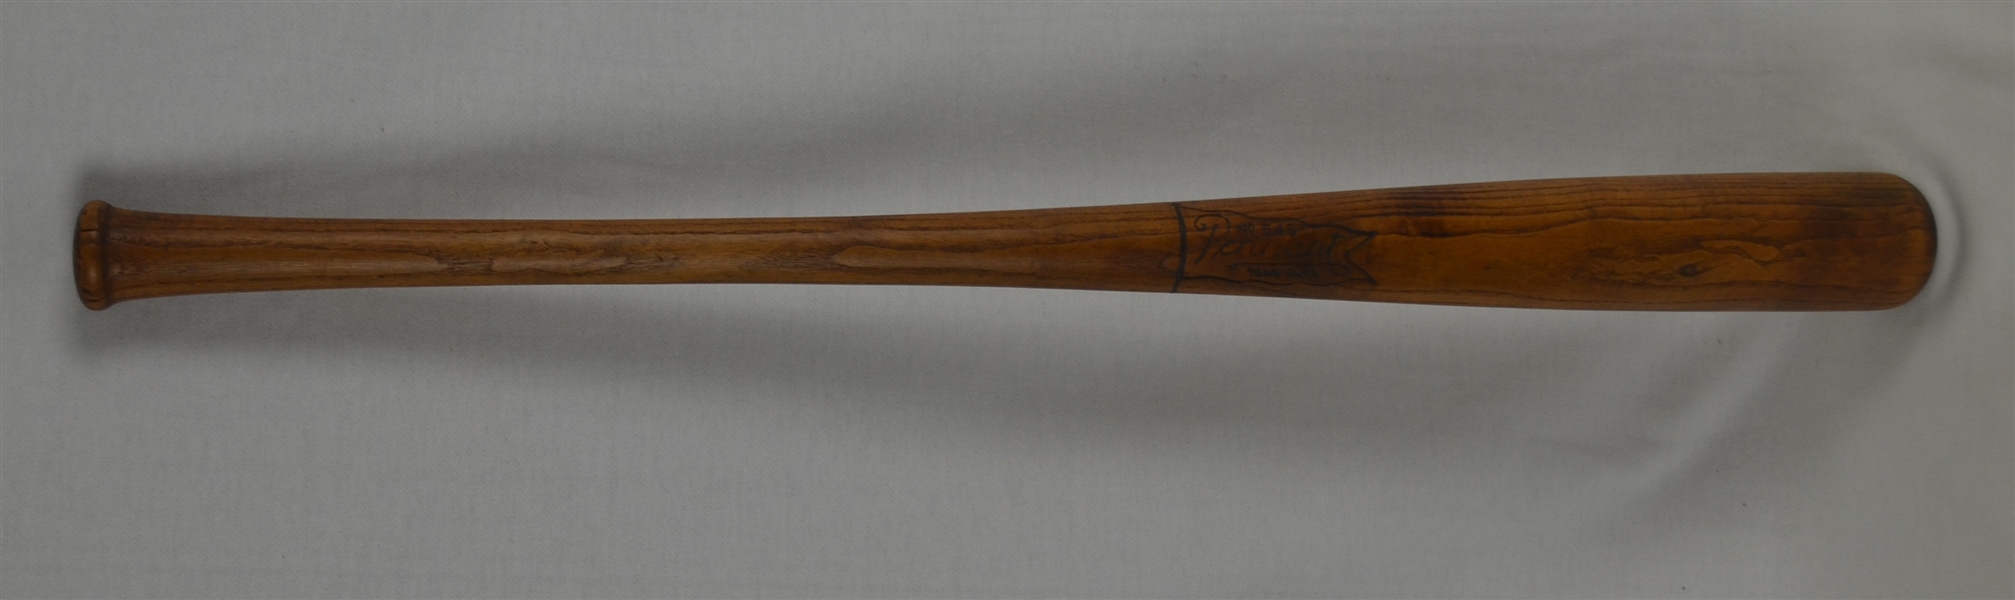 Rare Vintage 1920s Penant Baseball Bat No. 548 